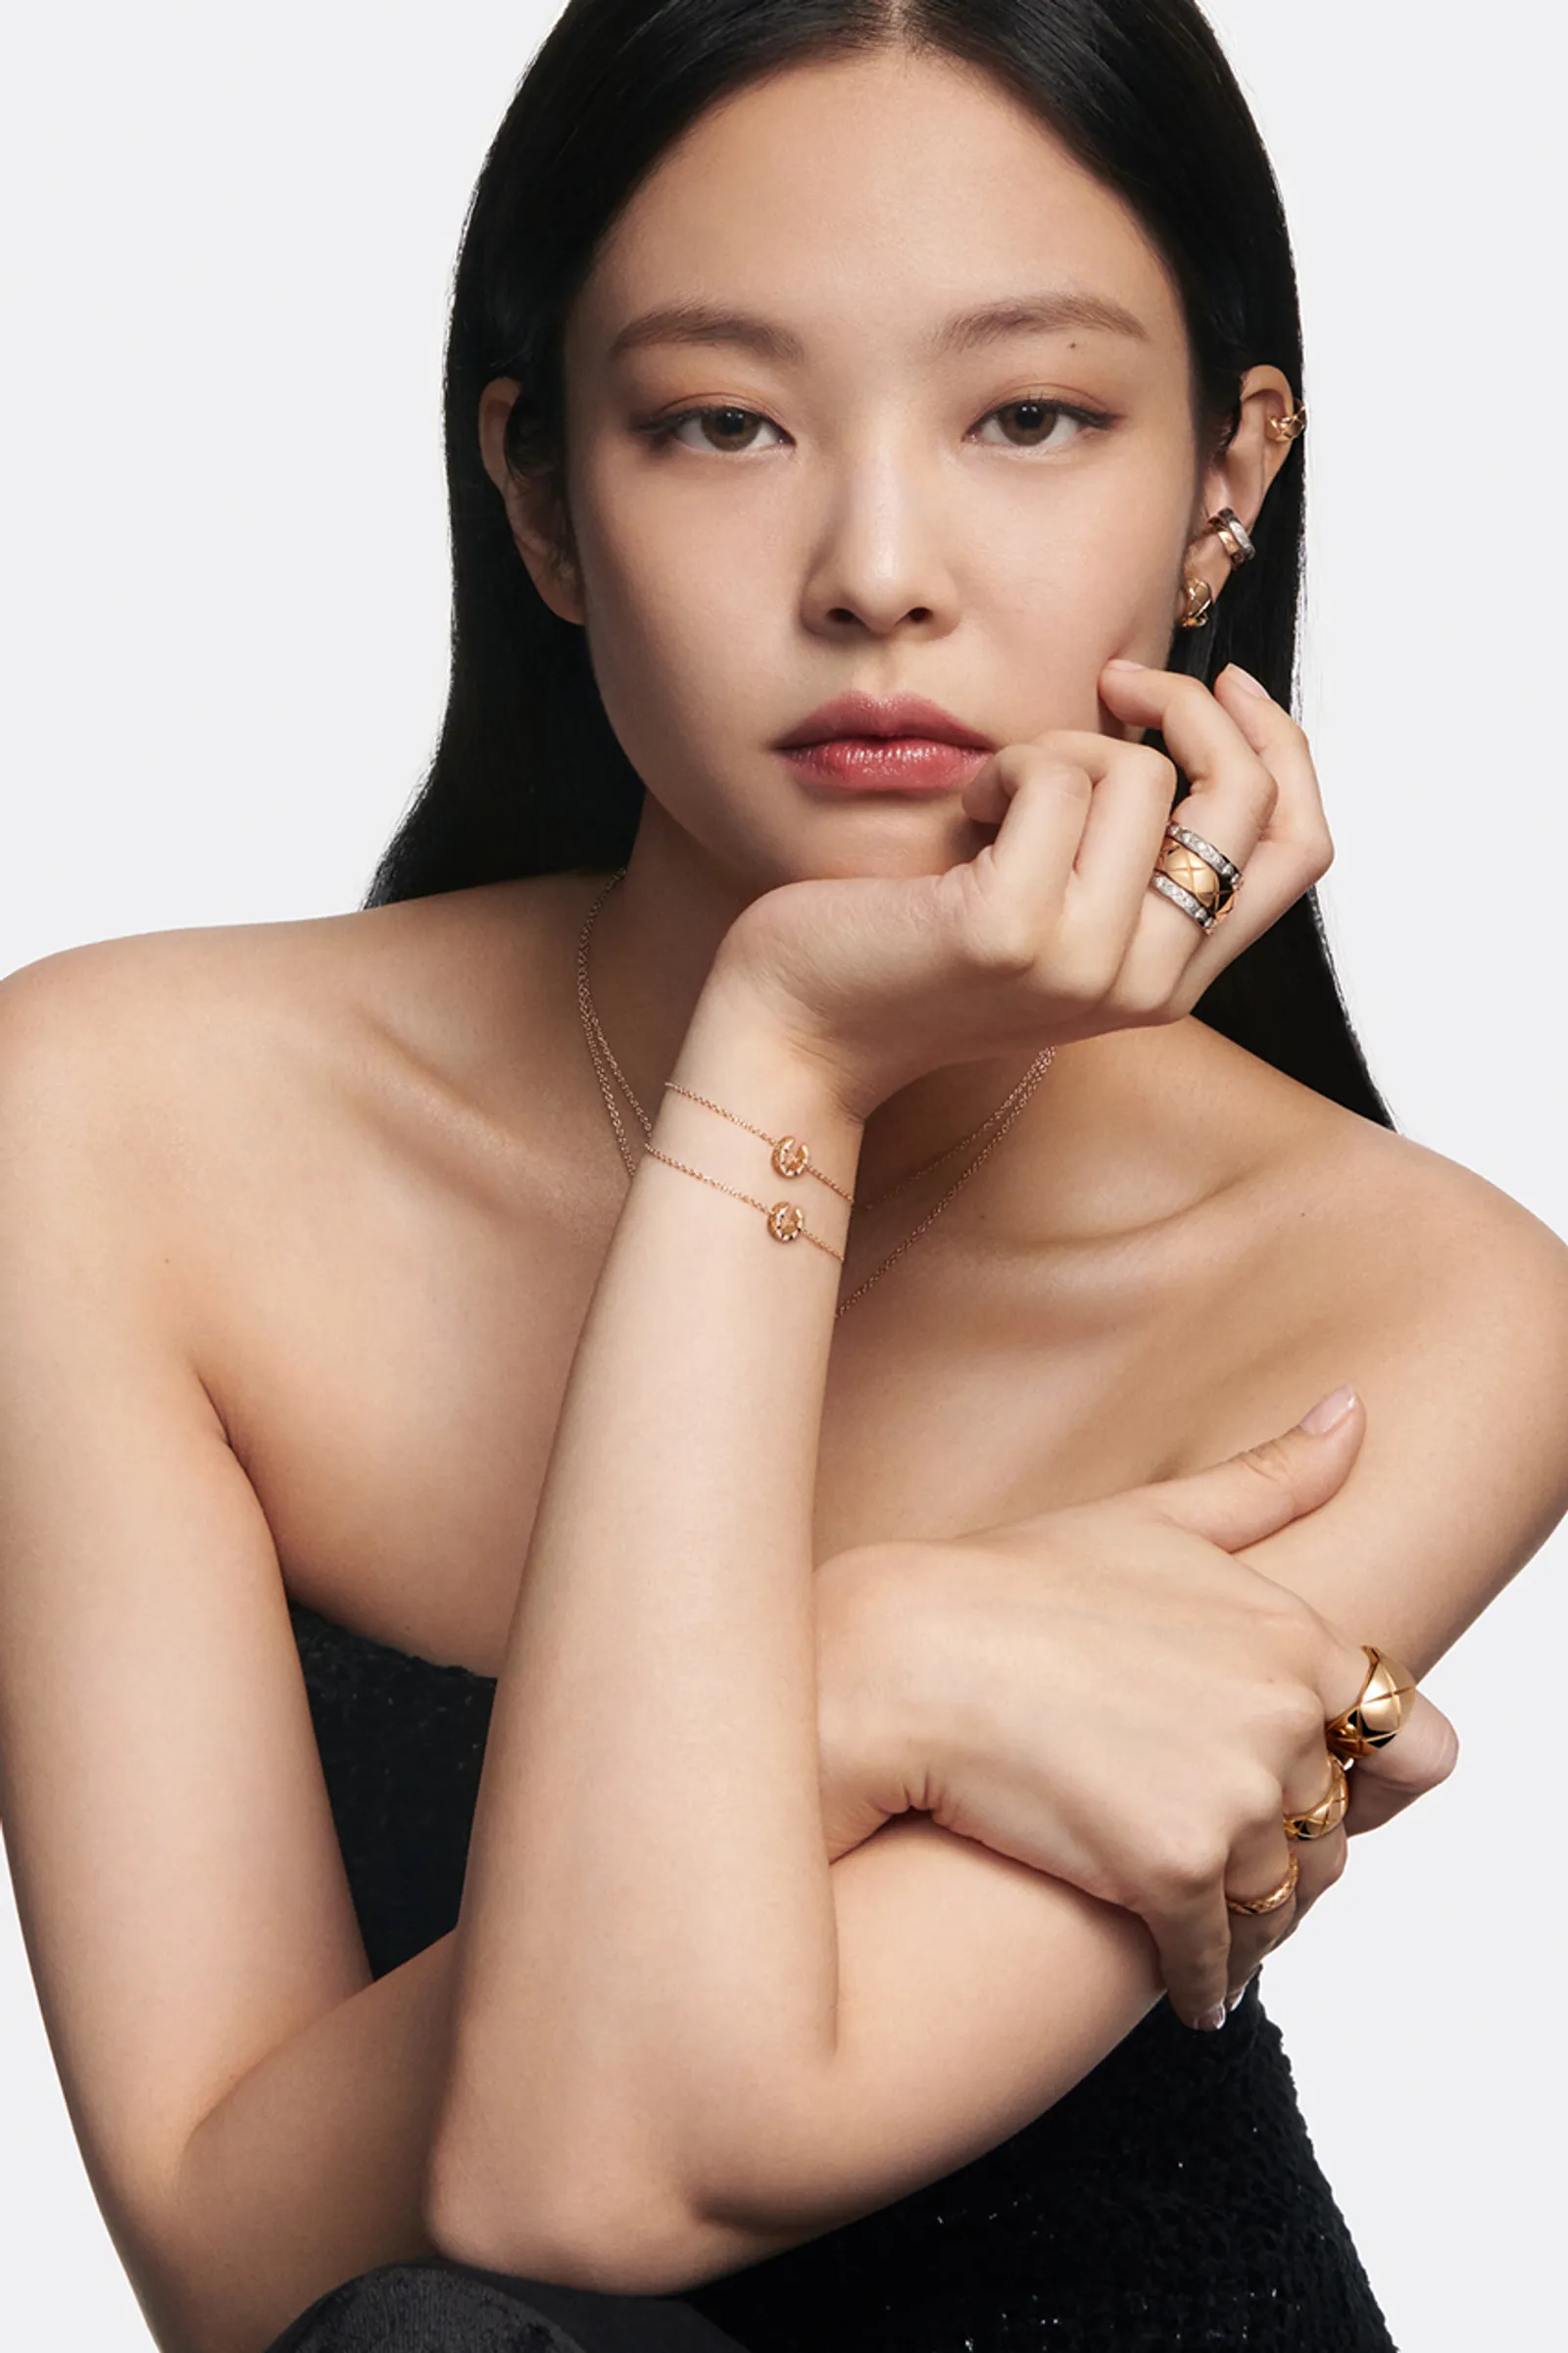 Jennie 'BLACKPINK' Tampil Mewah saat Bintangi Kampanye Terbaru Chanel